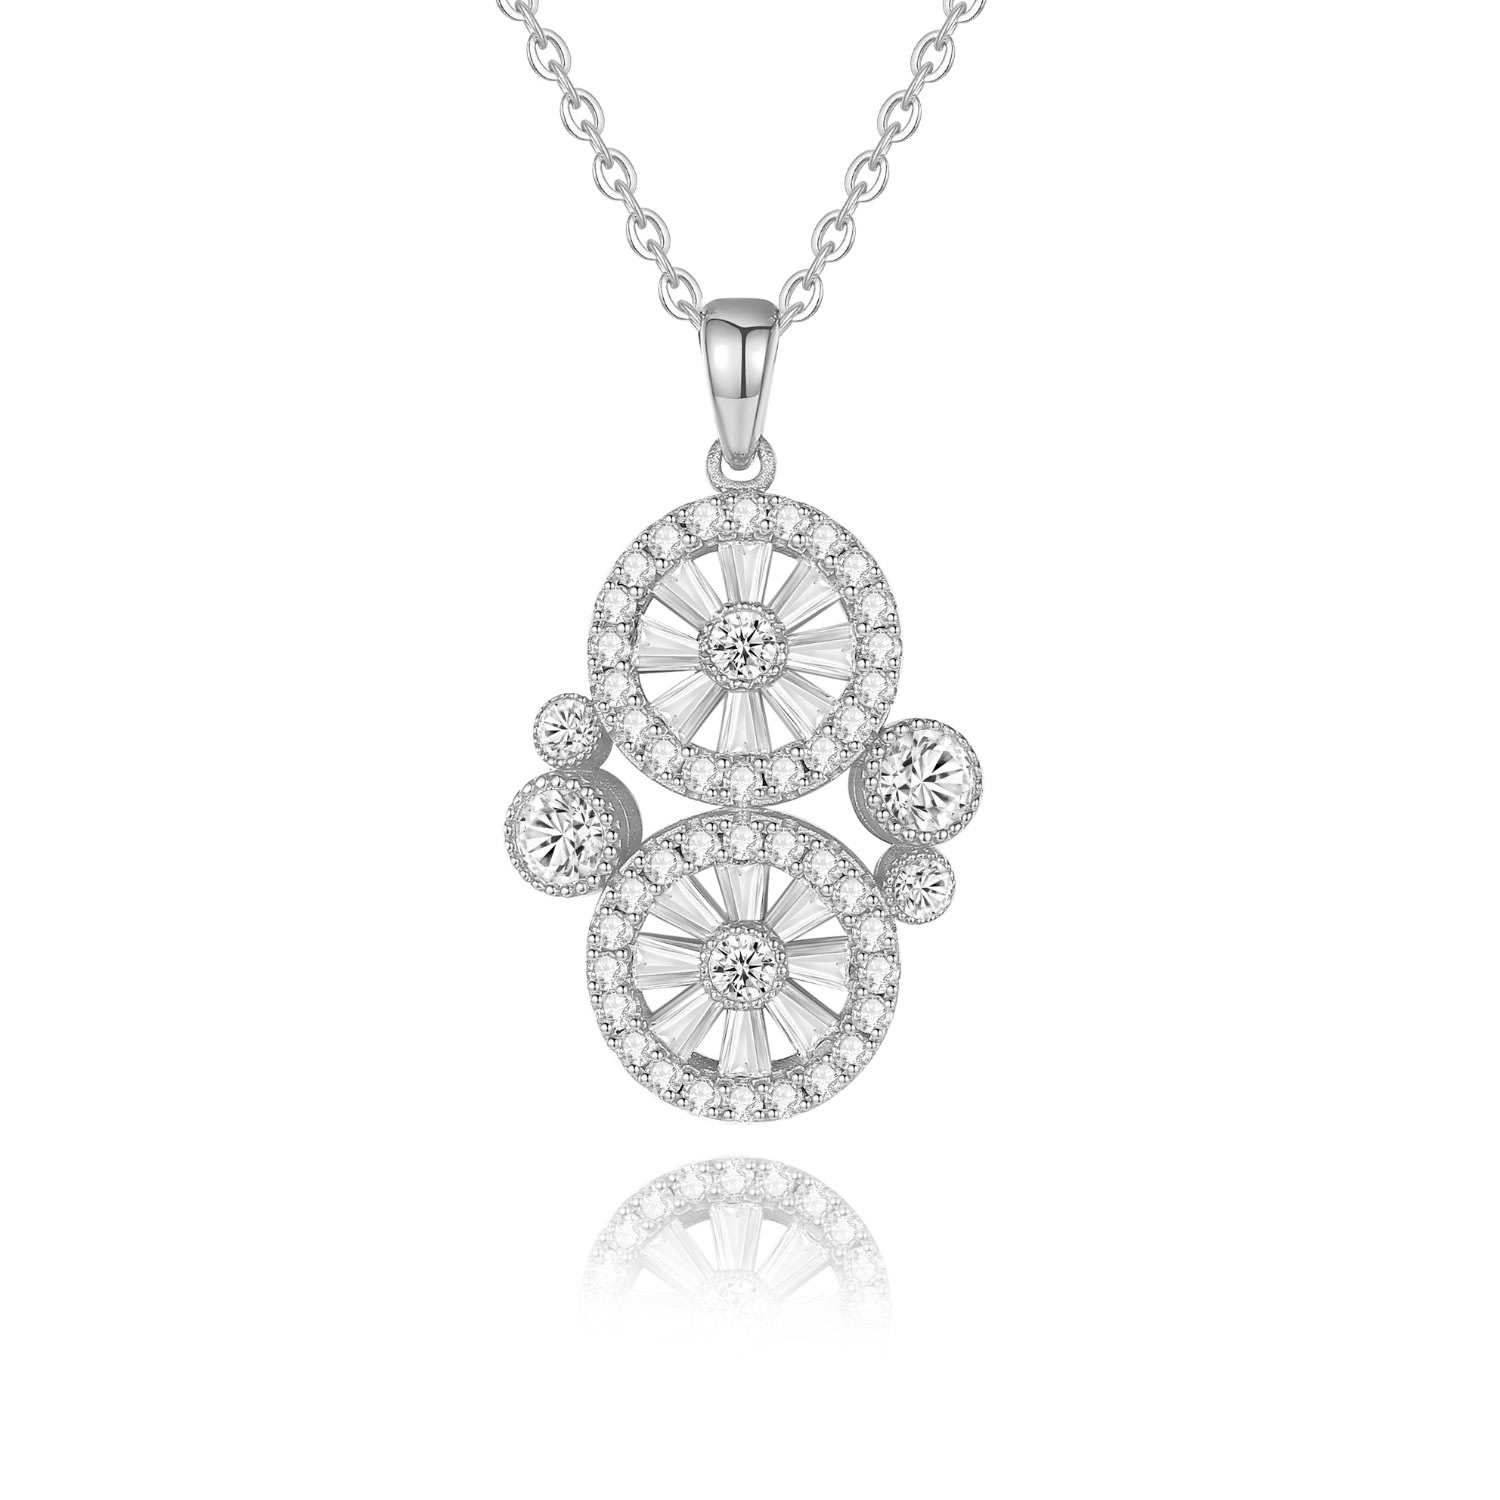 Shop Classicharms Women's Silver Wheel Of Fortune Pendant Necklace